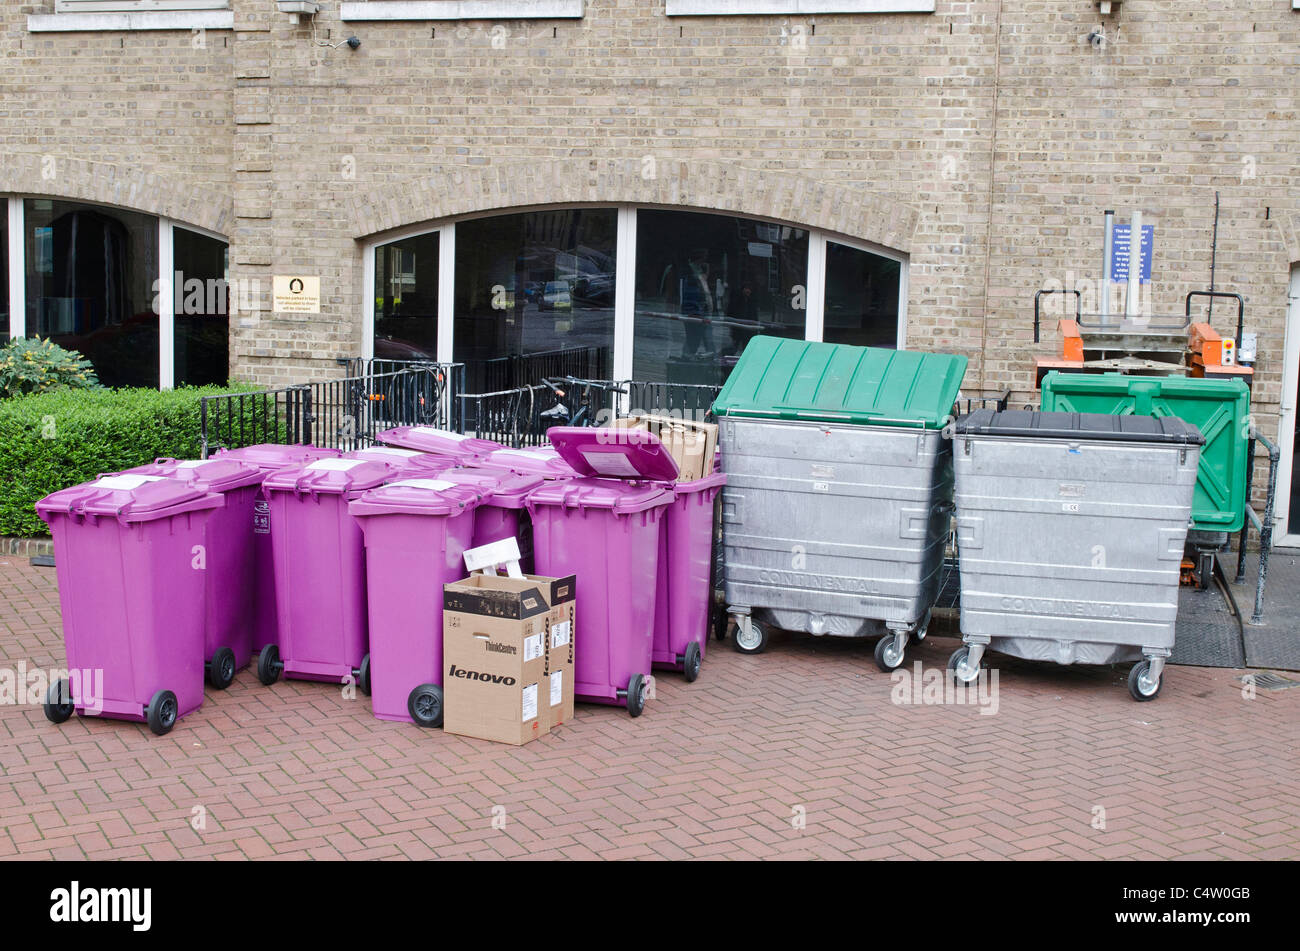 https://c8.alamy.com/comp/C4W0GB/wheelie-bins-purple-bins-recycling-rubbish-waste-uk-C4W0GB.jpg